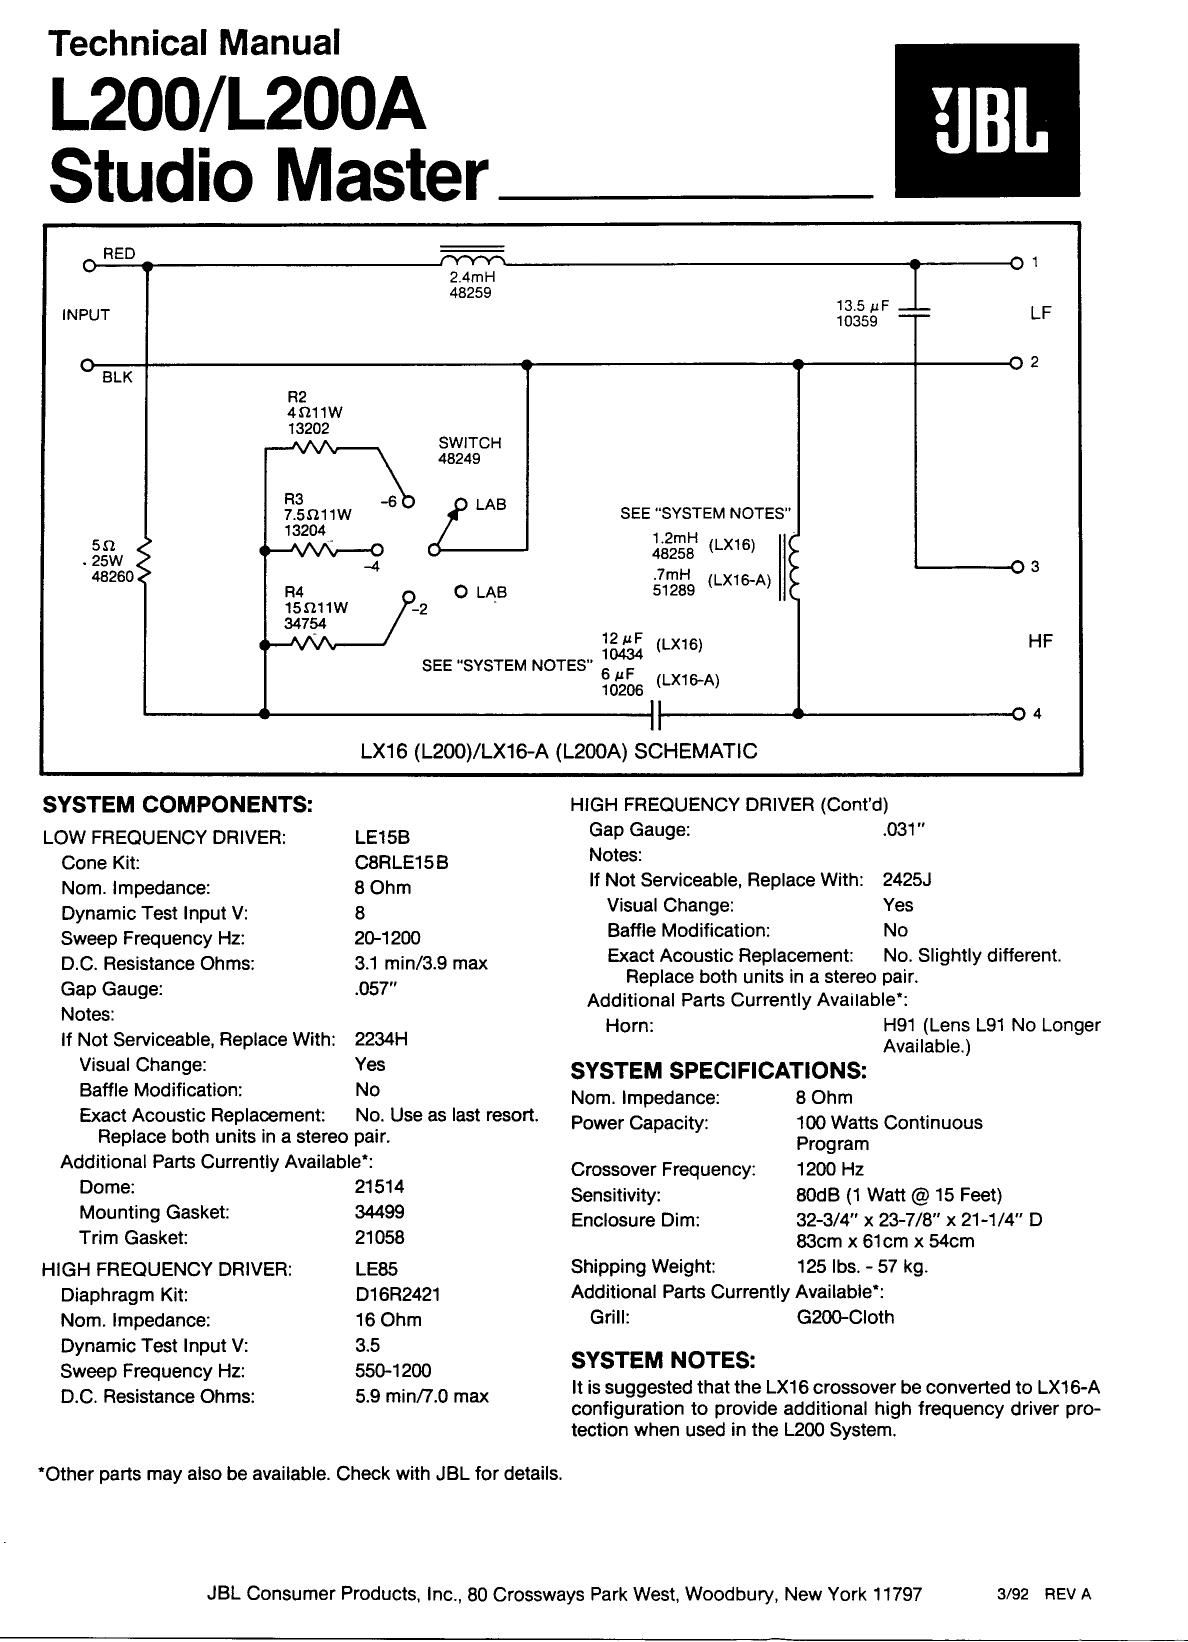 Jbl L 200 Technical Manual